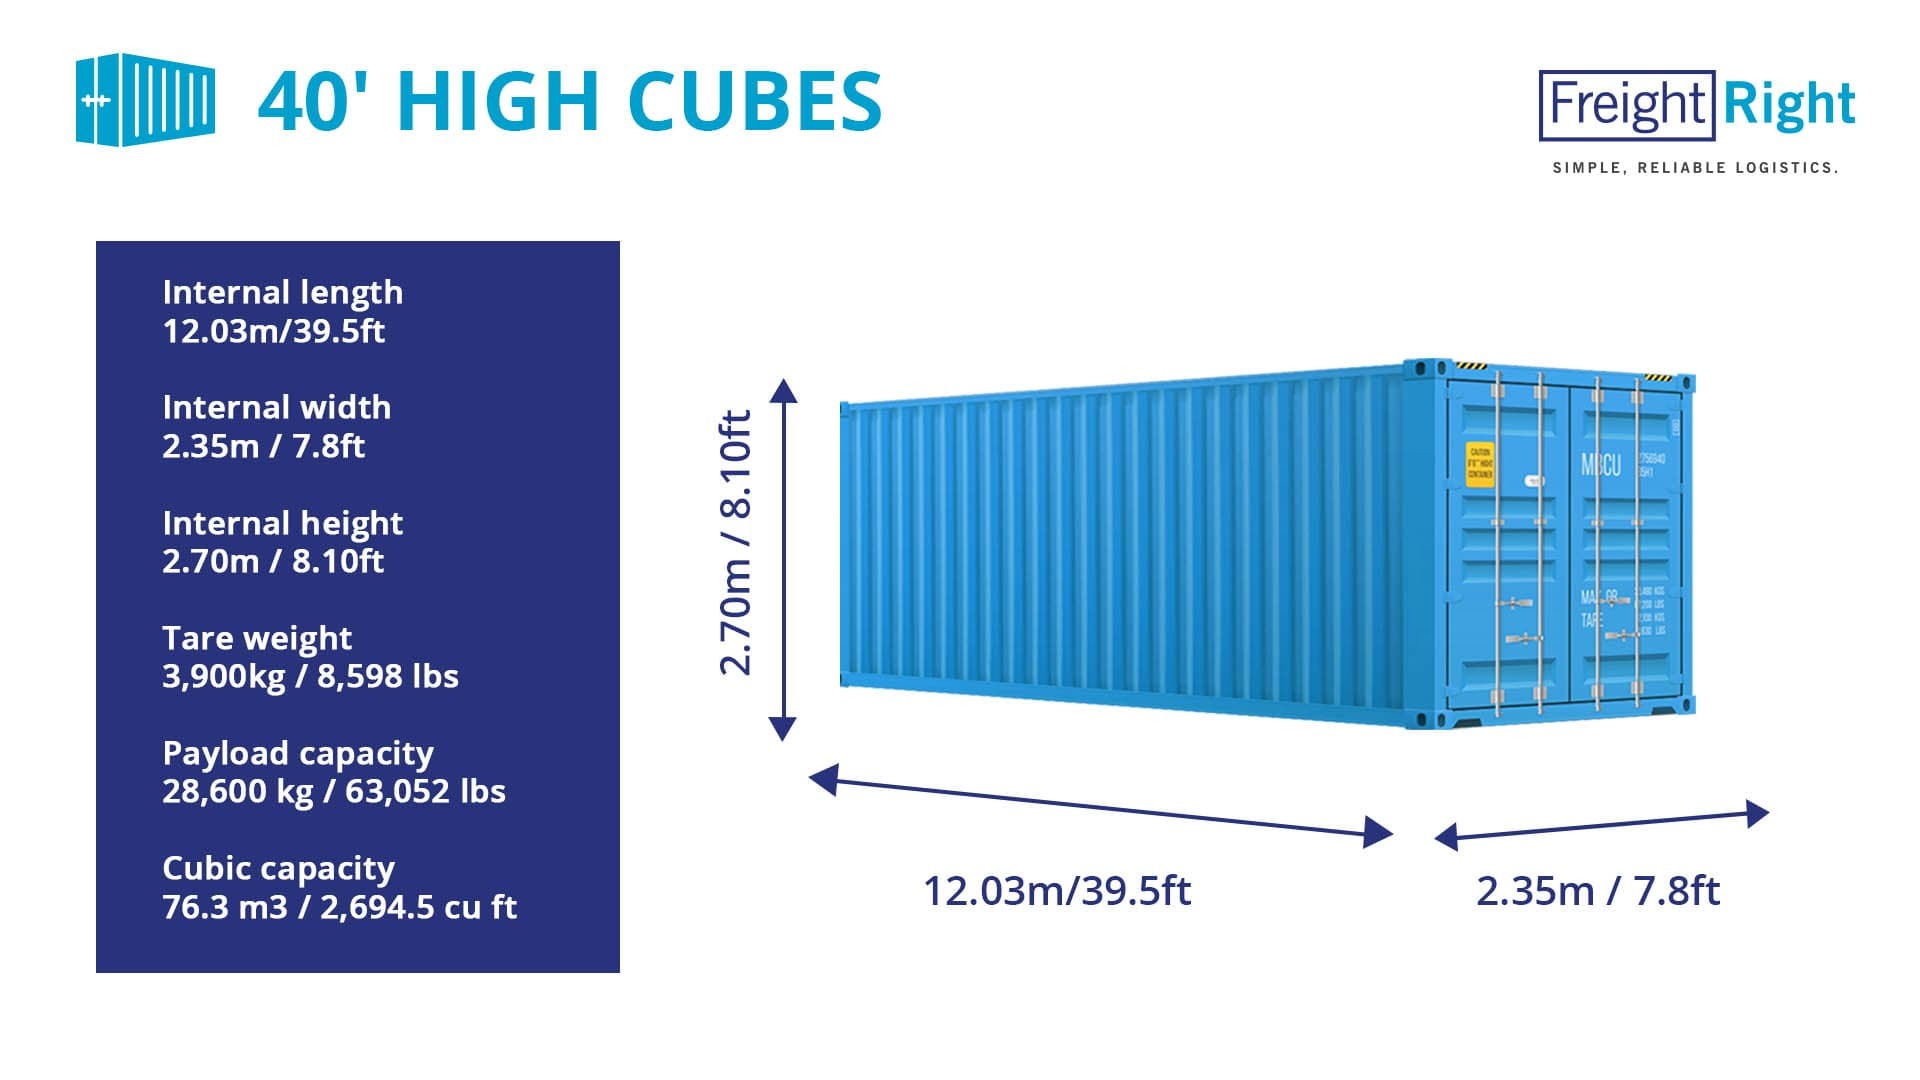 40 футов high cube. Контейнер 40 HC/hq (High Cube). Контейнер 40 фут Хай Кьюб размер. Габариты 40 фут контейнера High Cube. Размеры морского контейнера 40 футов High Cube.